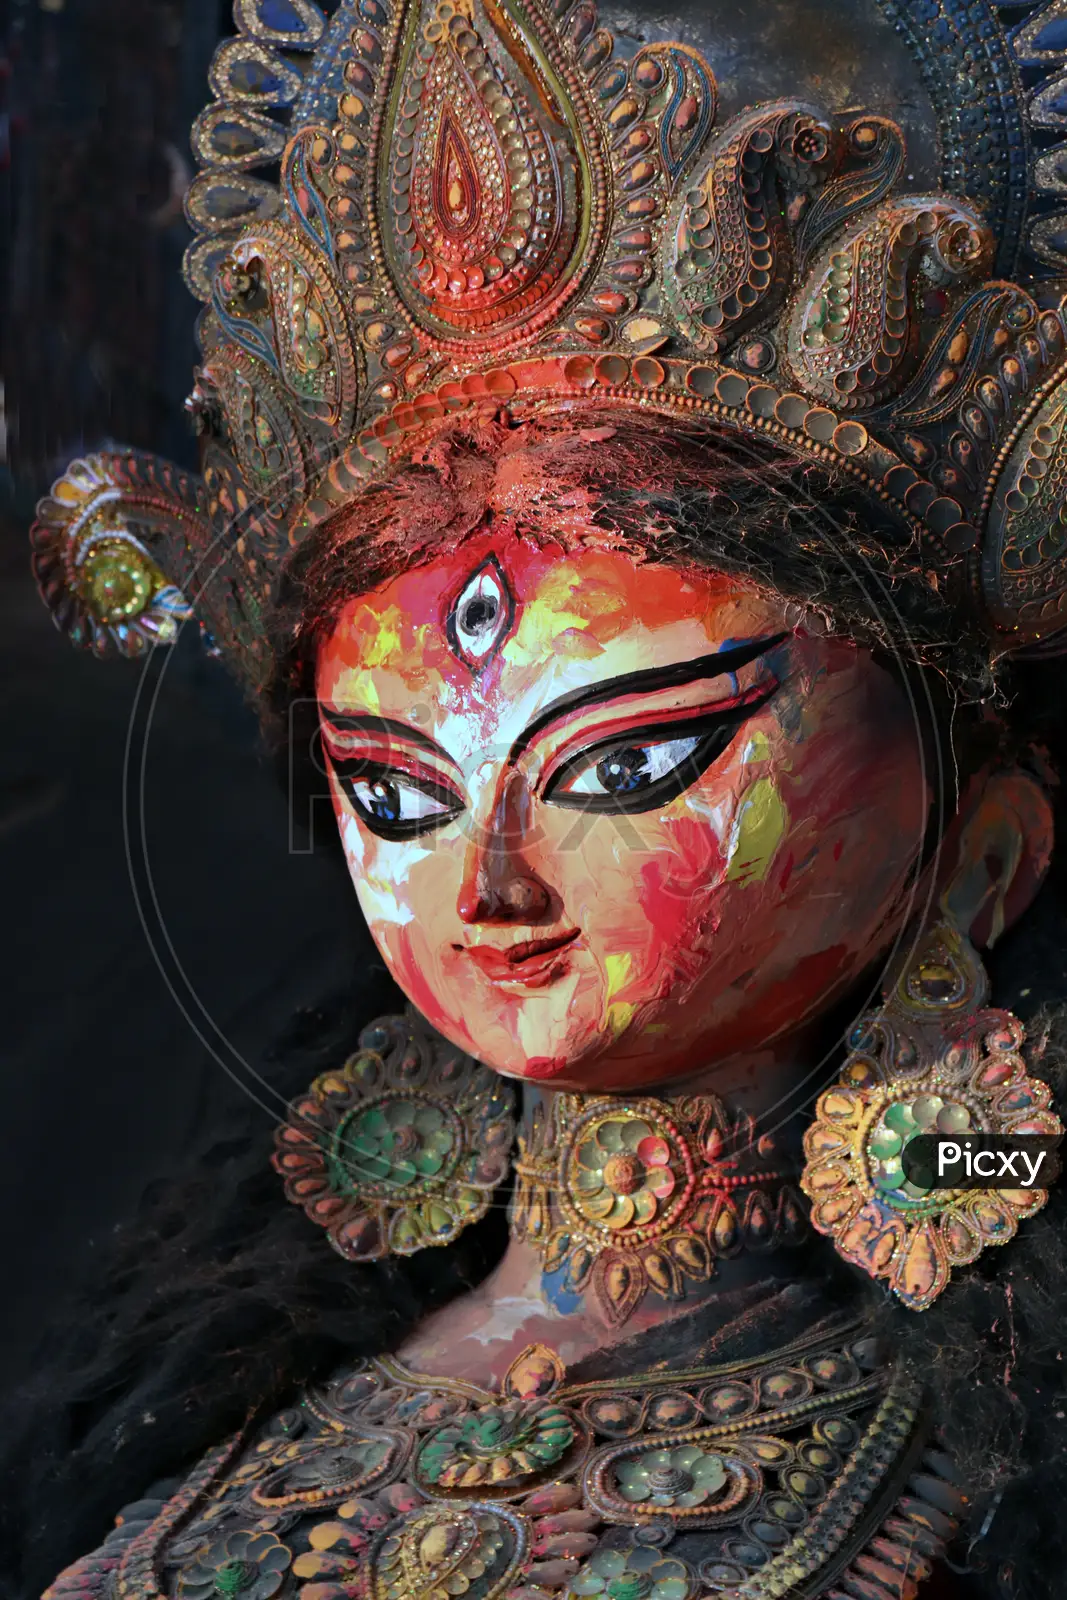 Durga puja feltival durgapuja kolkata bengali HD wallpaper  Peakpx